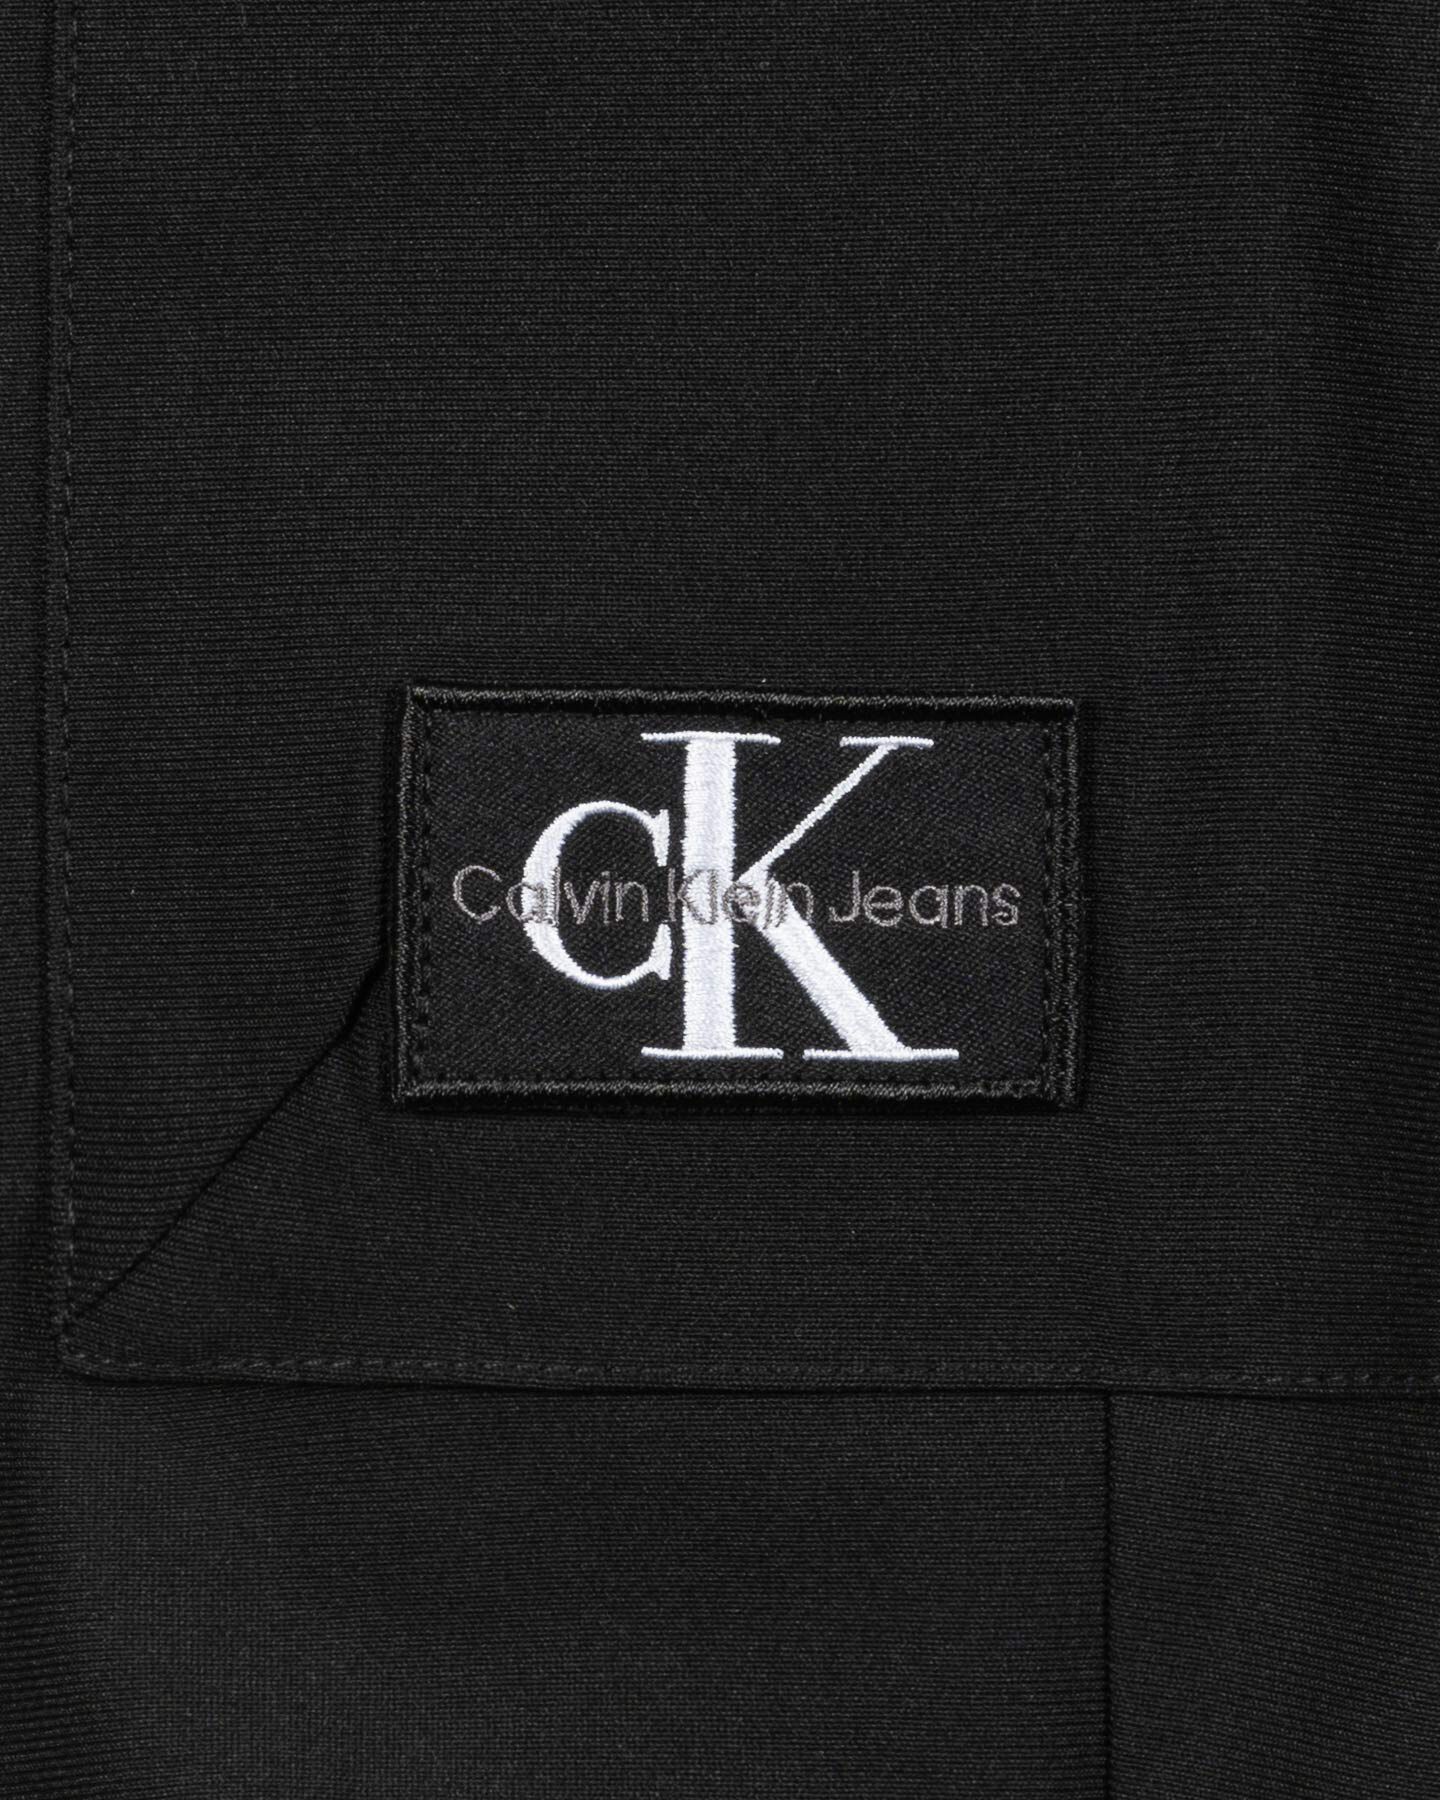  Pantalone CALVIN KLEIN JEANS PARACHUTE DRY KNIT JR S4131539|Ck Black|10 scatto 2